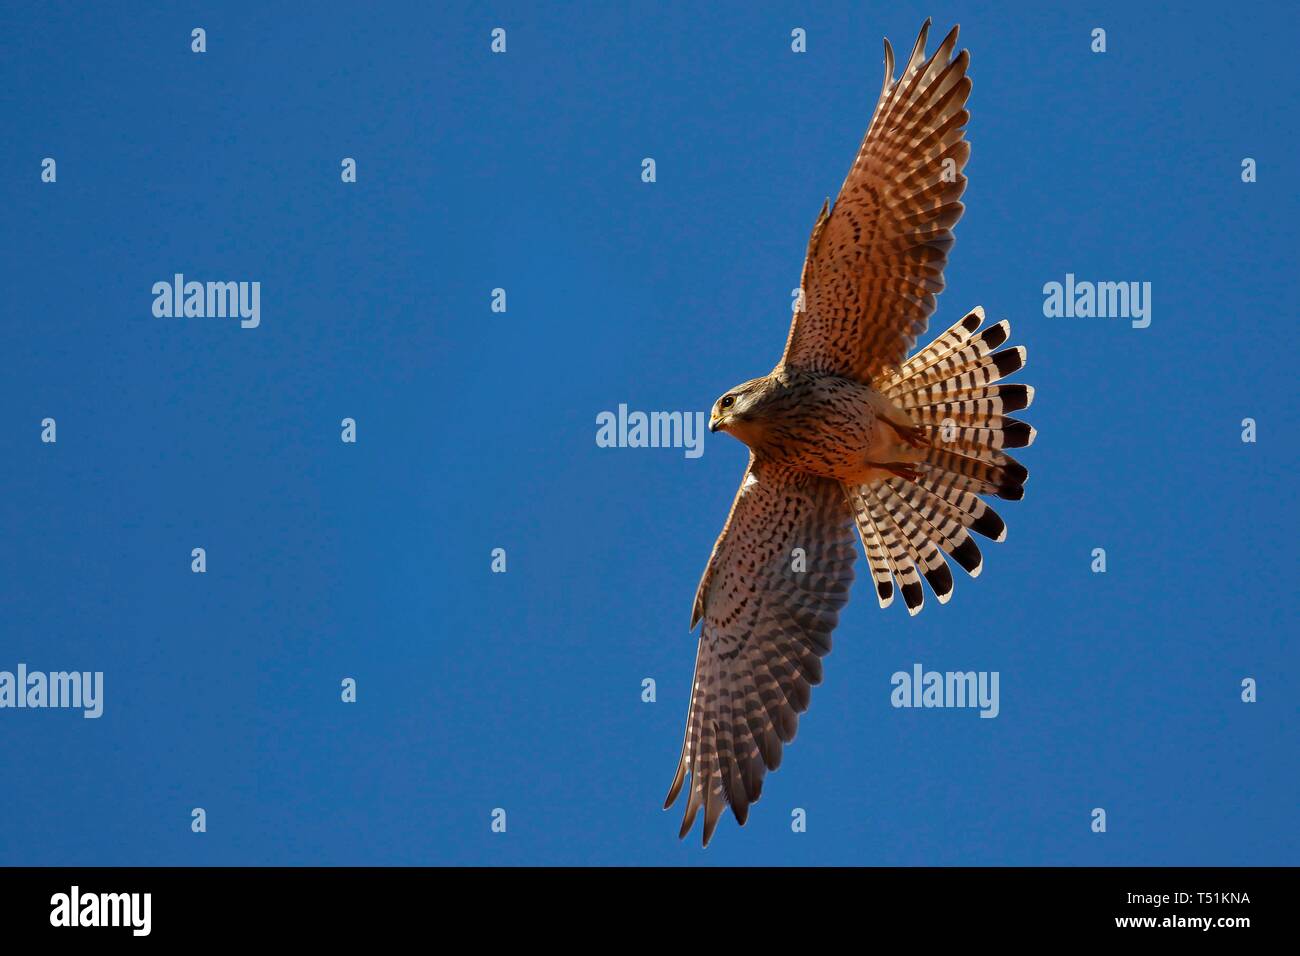 Common Common Kestrel (Falco tinnunculus) gliding, blue sky, Schleswig-Holstein, Germany Stock Photo